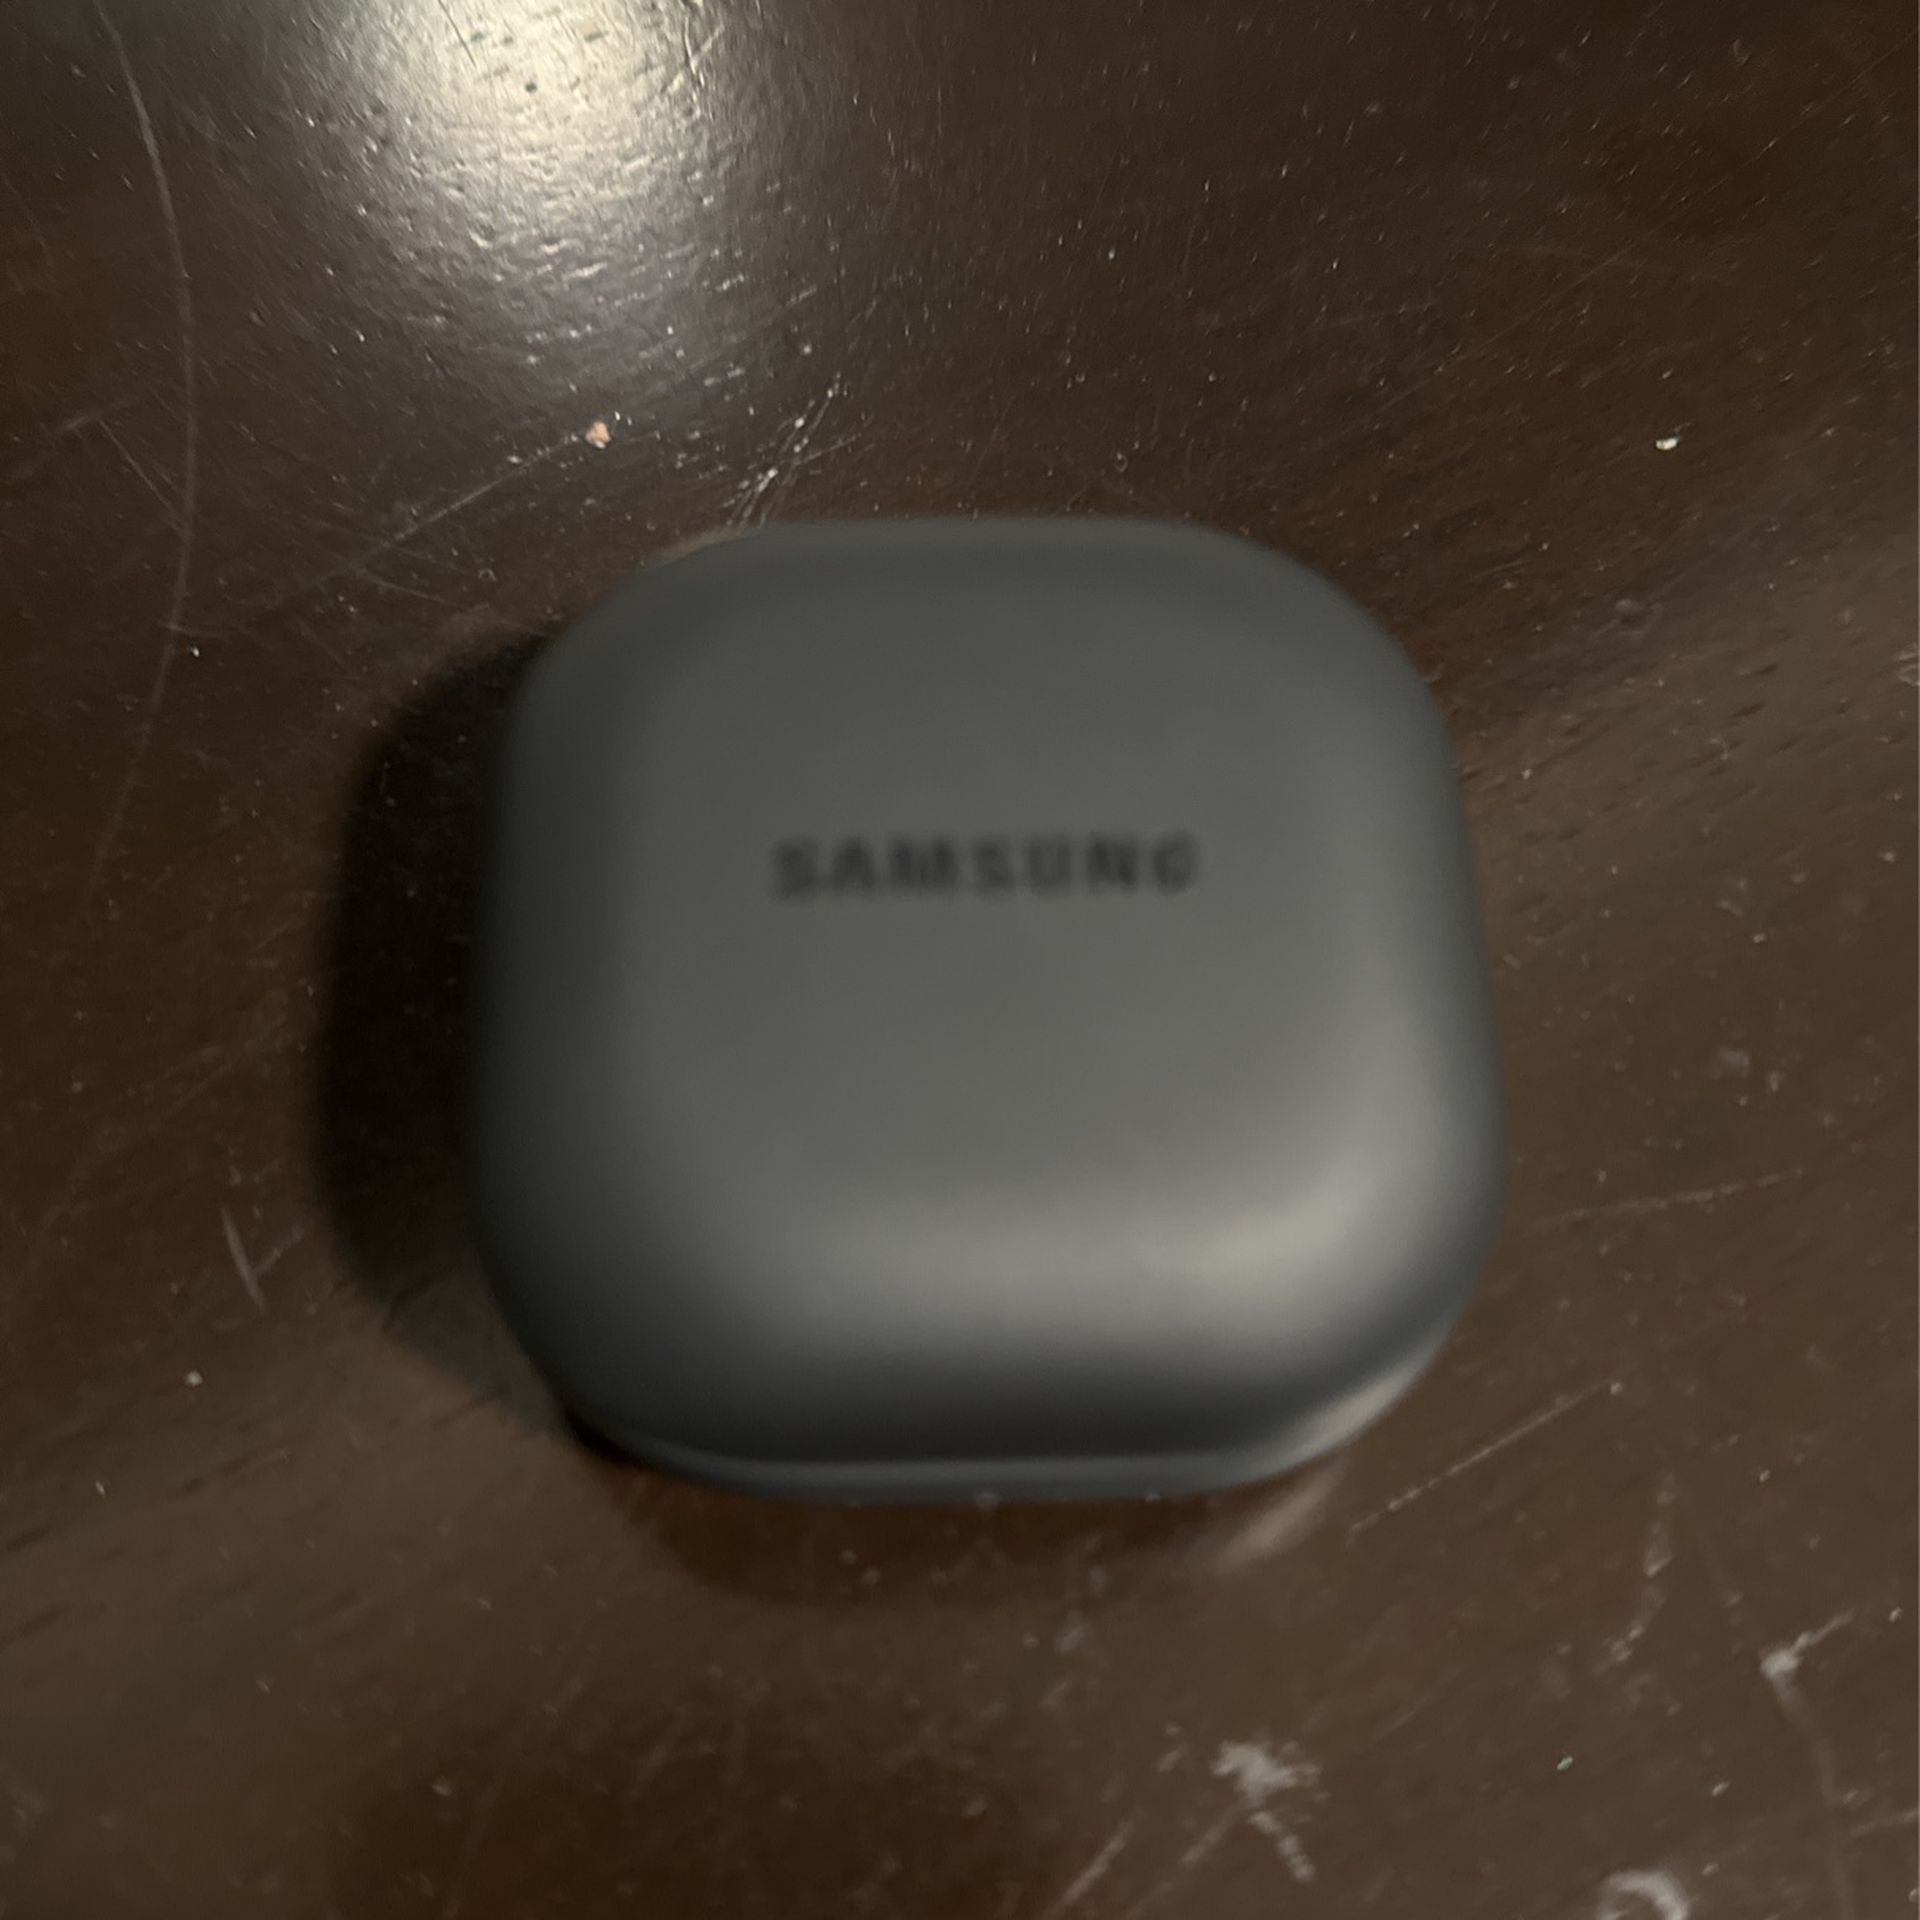 Samsung Wireless Headphones 